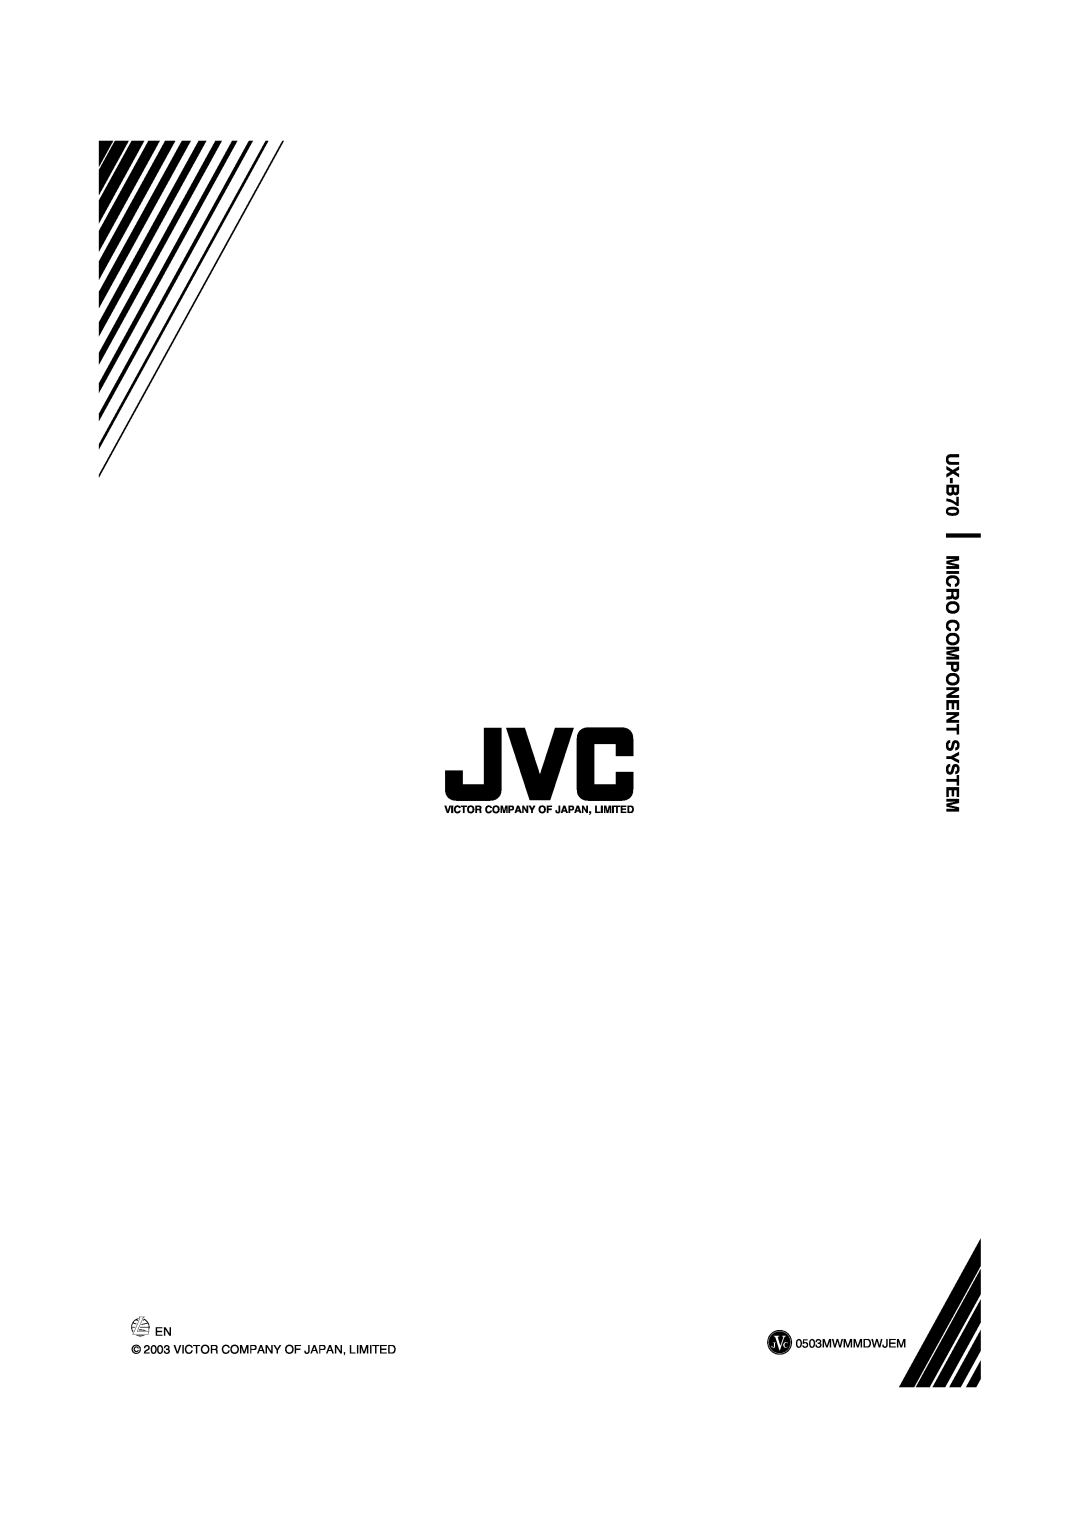 JVC CA-UXB70, SP-UXB70 manual UX-B70MICRO COMPONENT SYSTEM, 0503MWMMDWJEM, Victor Company Of Japan, Limited 